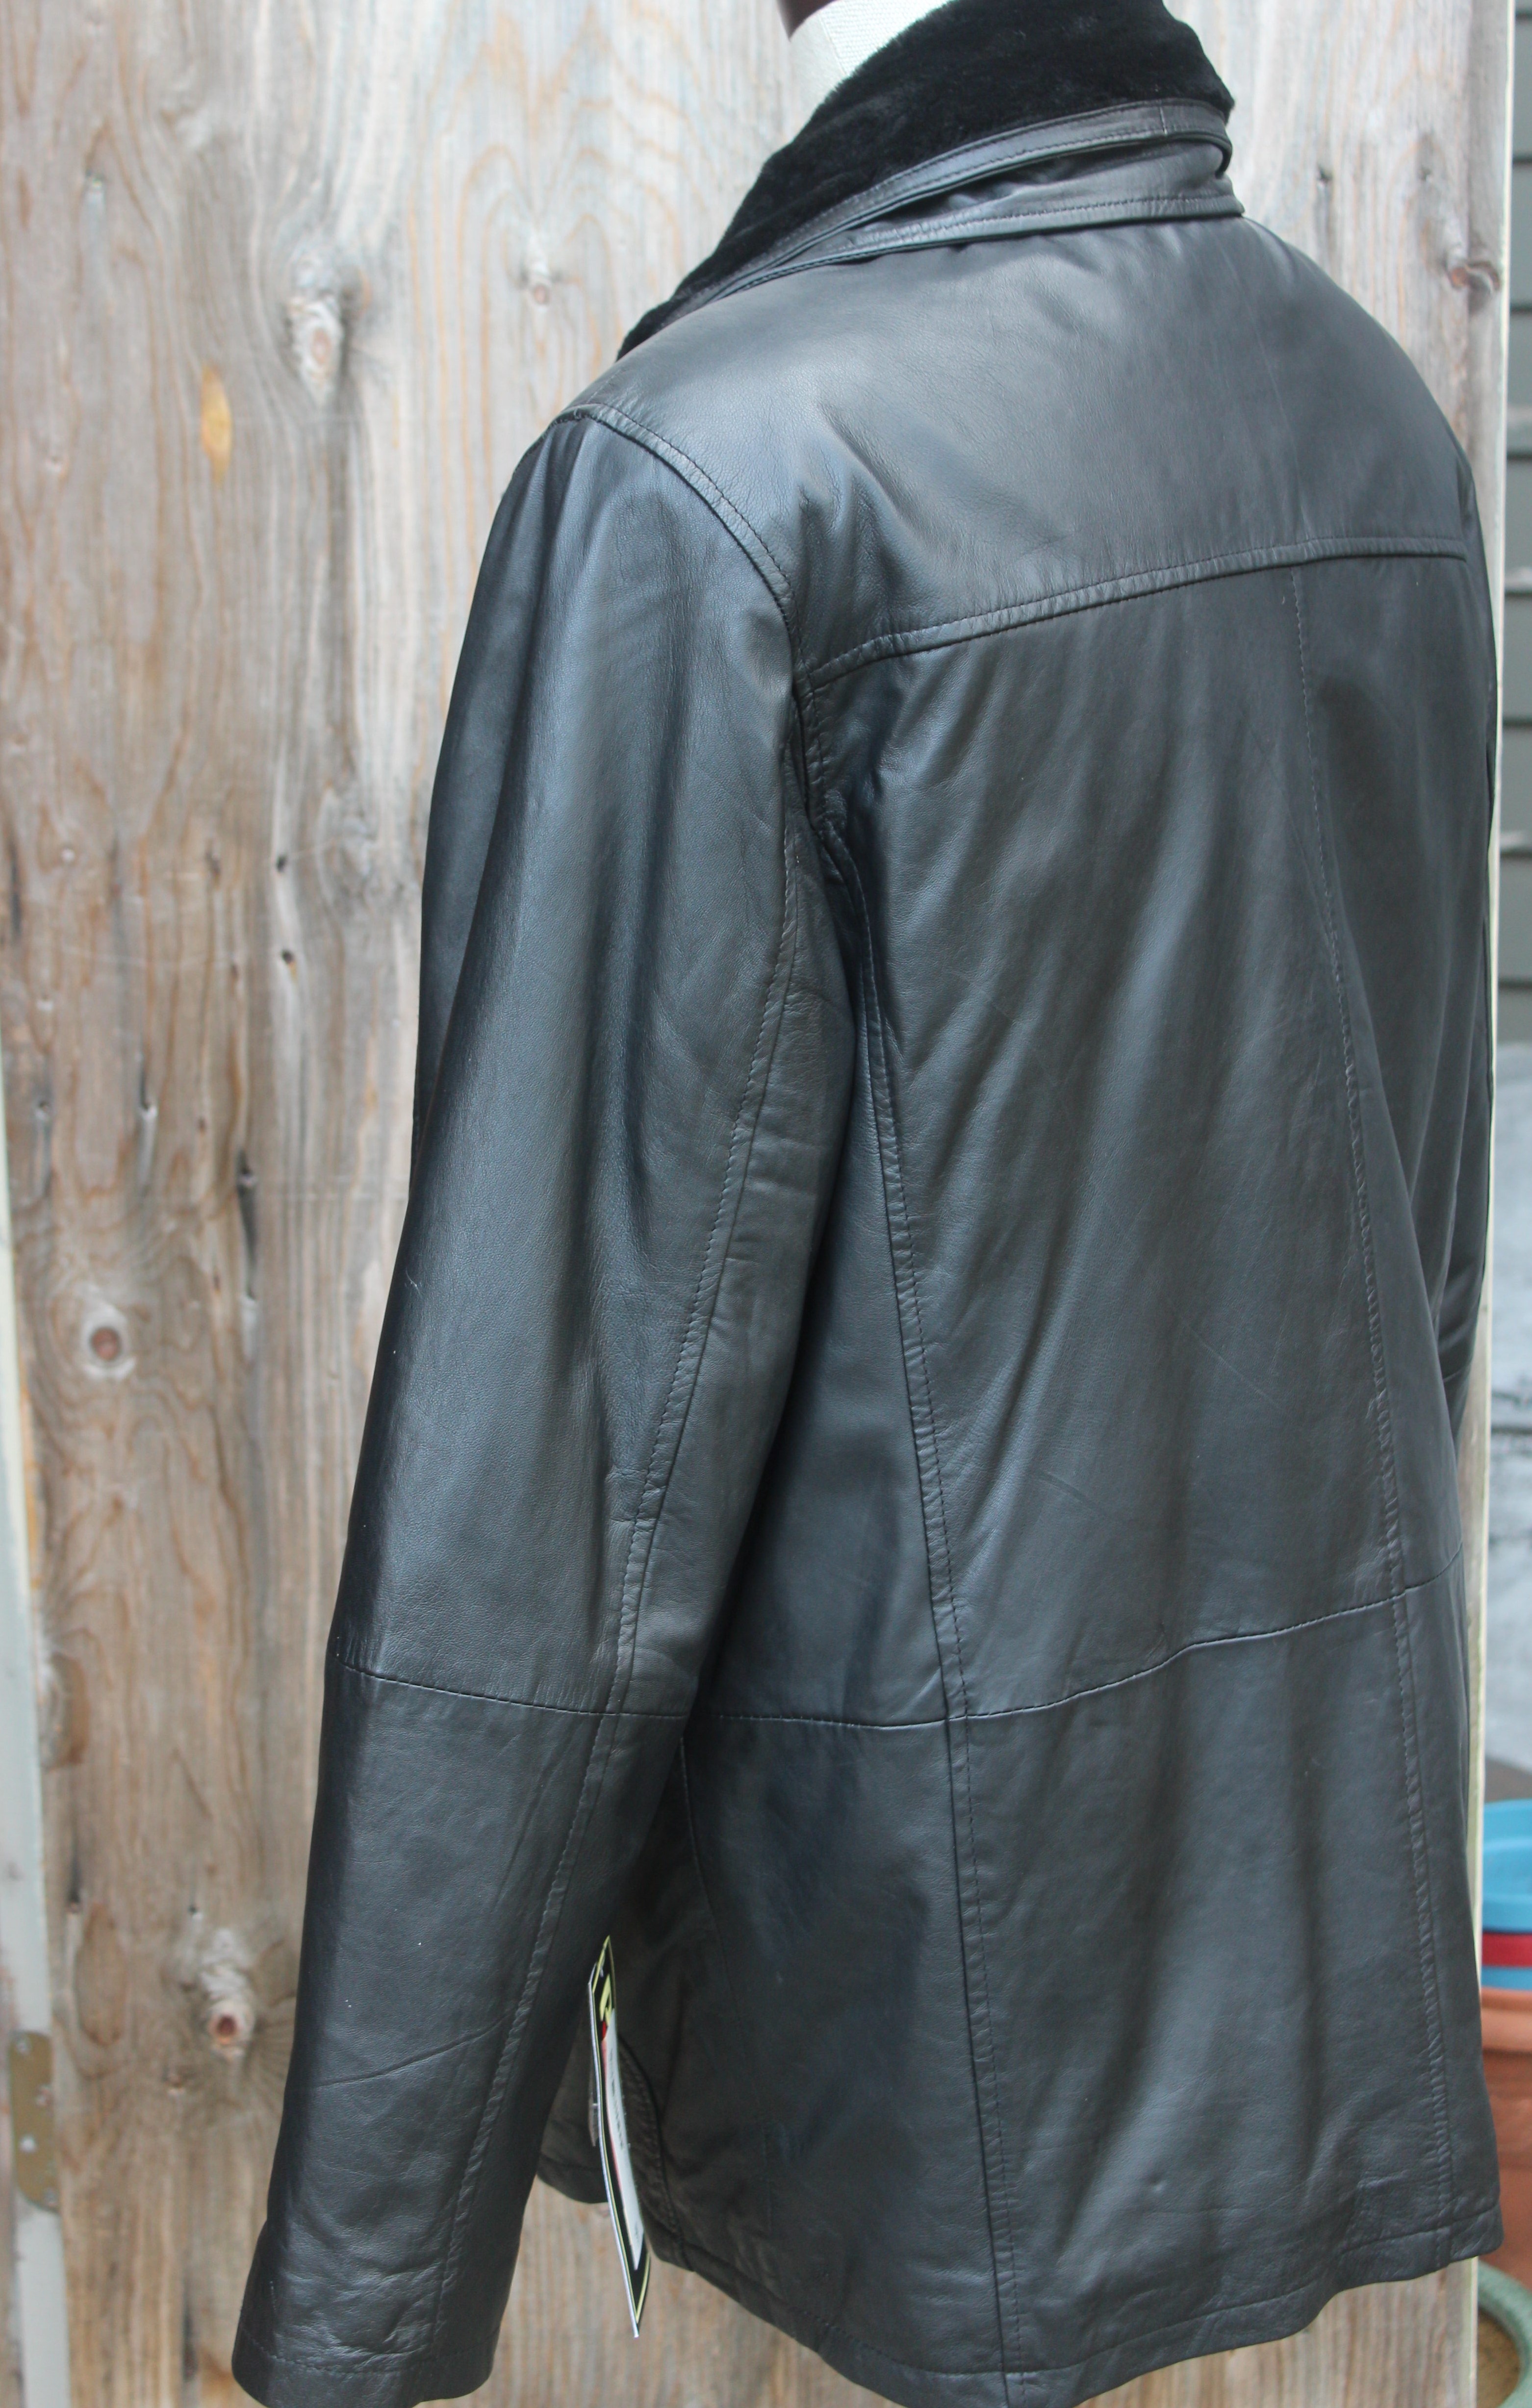 Black Leather & Fur Collar- $495.00
Plonge Leathers
Style #: 40655BK